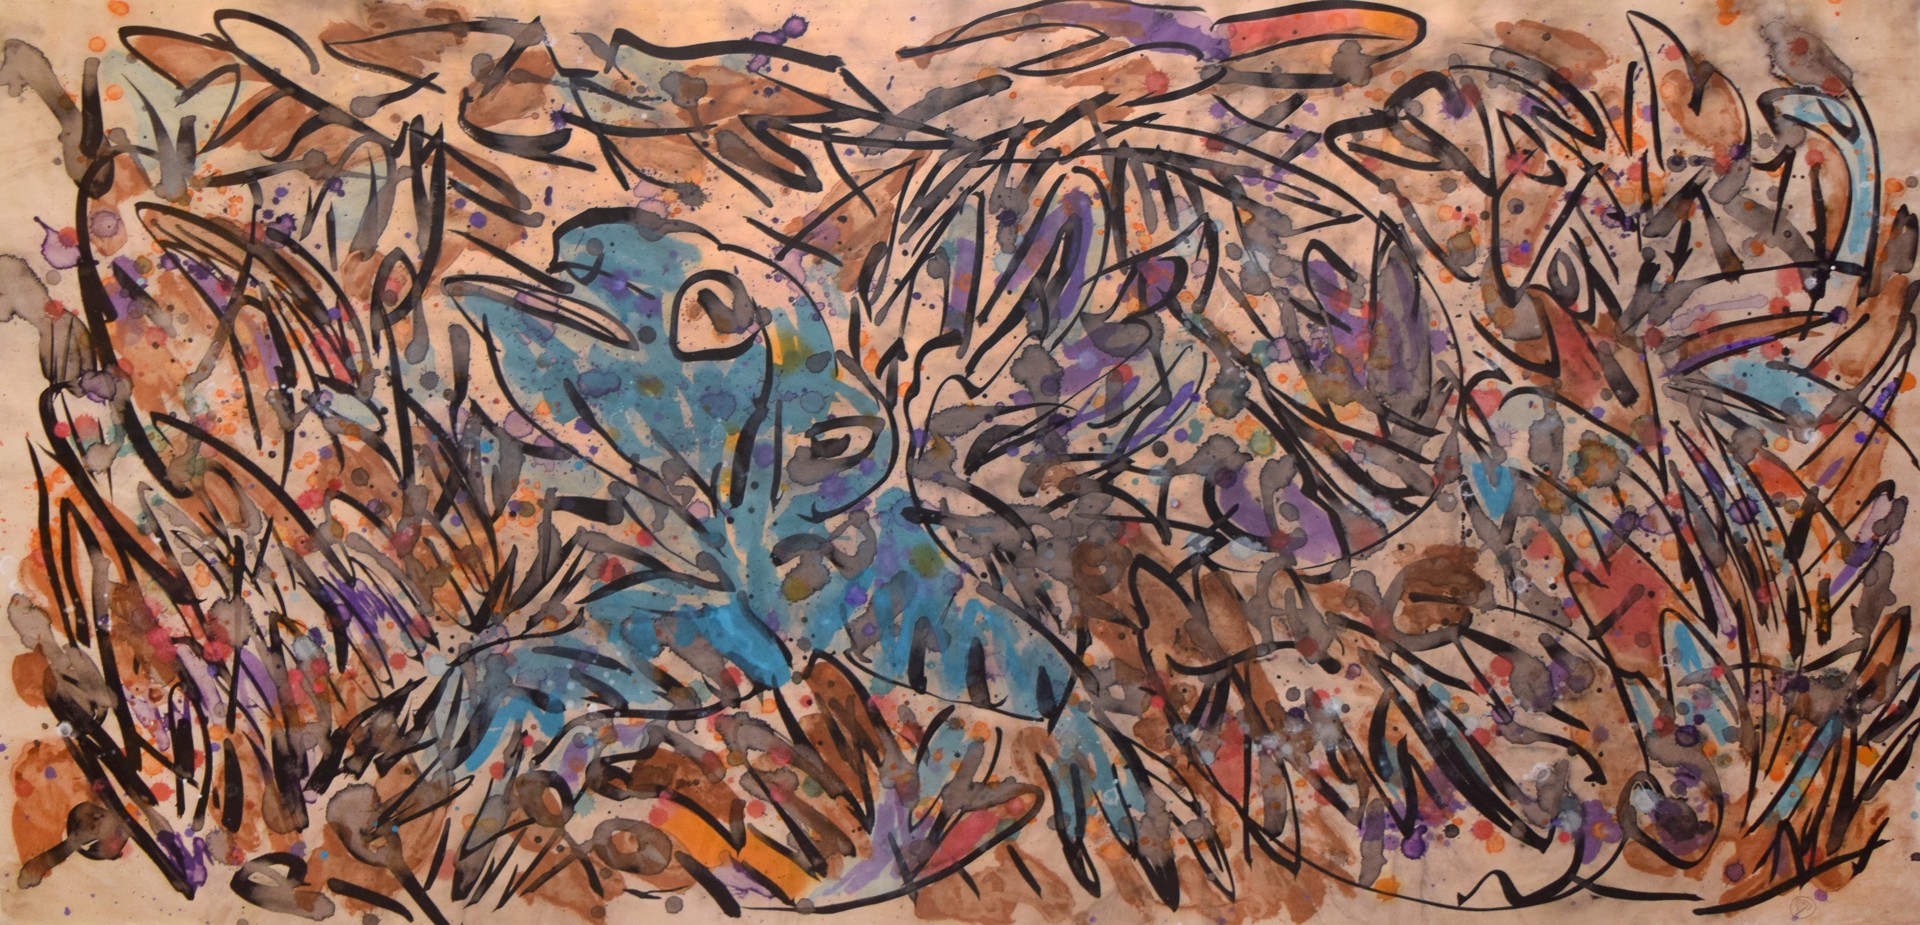 Blue Lizard by Ibsen Espada - Early Work